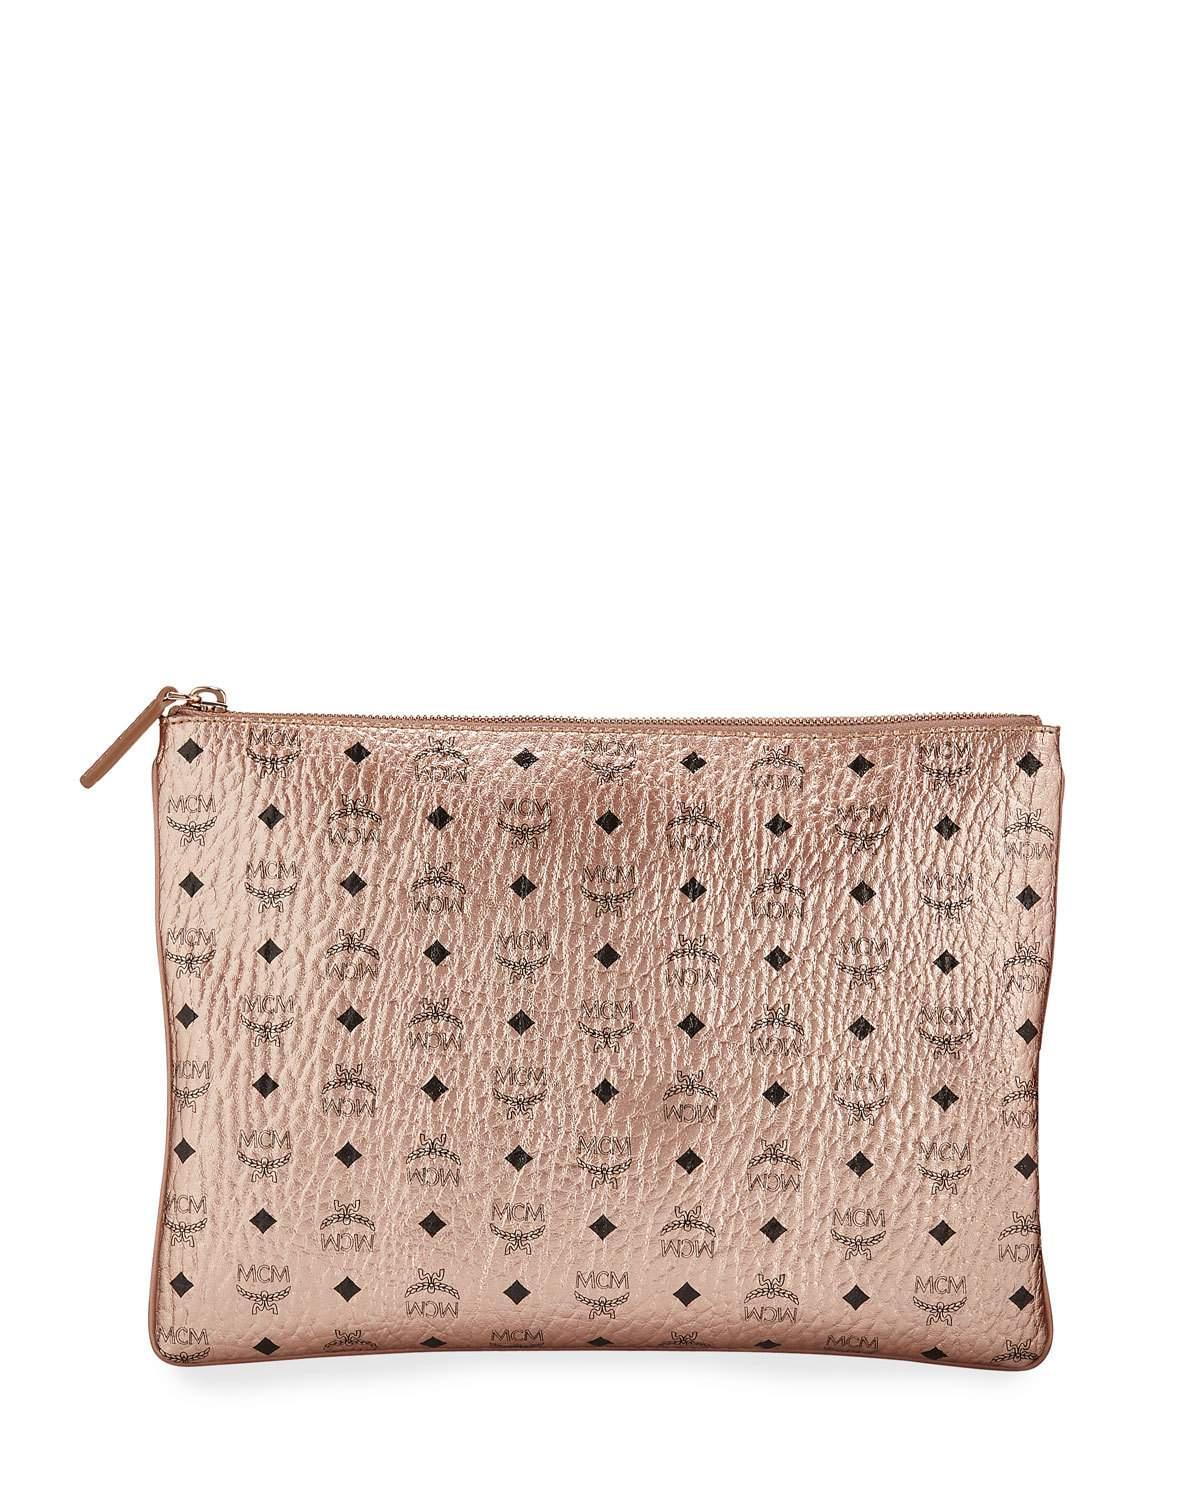 MCM Leather Visetos Original Medium Crossbody Pouch Bag in Rose Gold (Pink) - Lyst